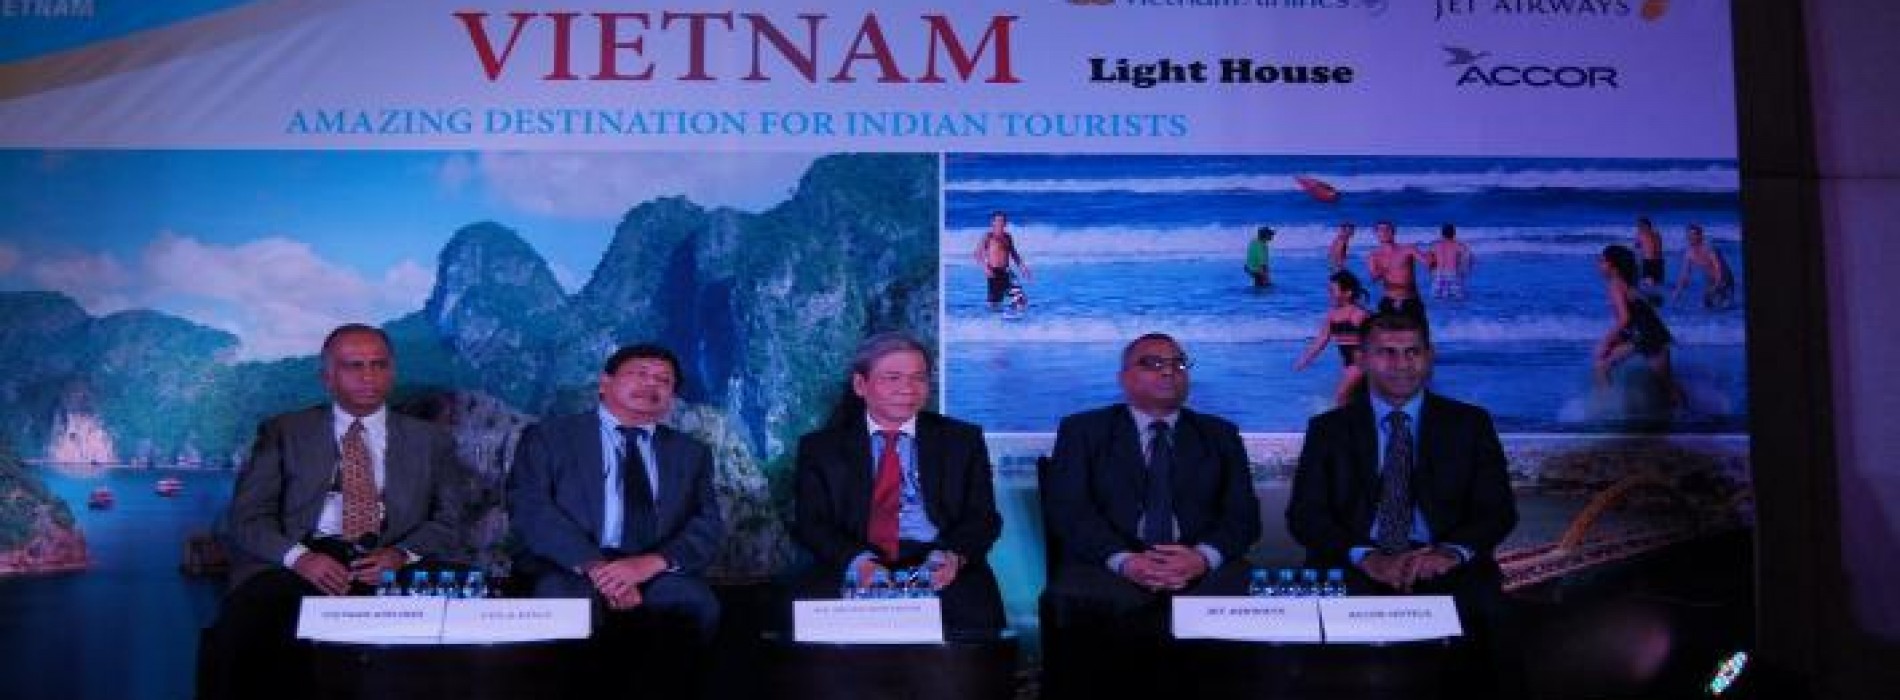 Historic Vietnam comes calling for Min tourists